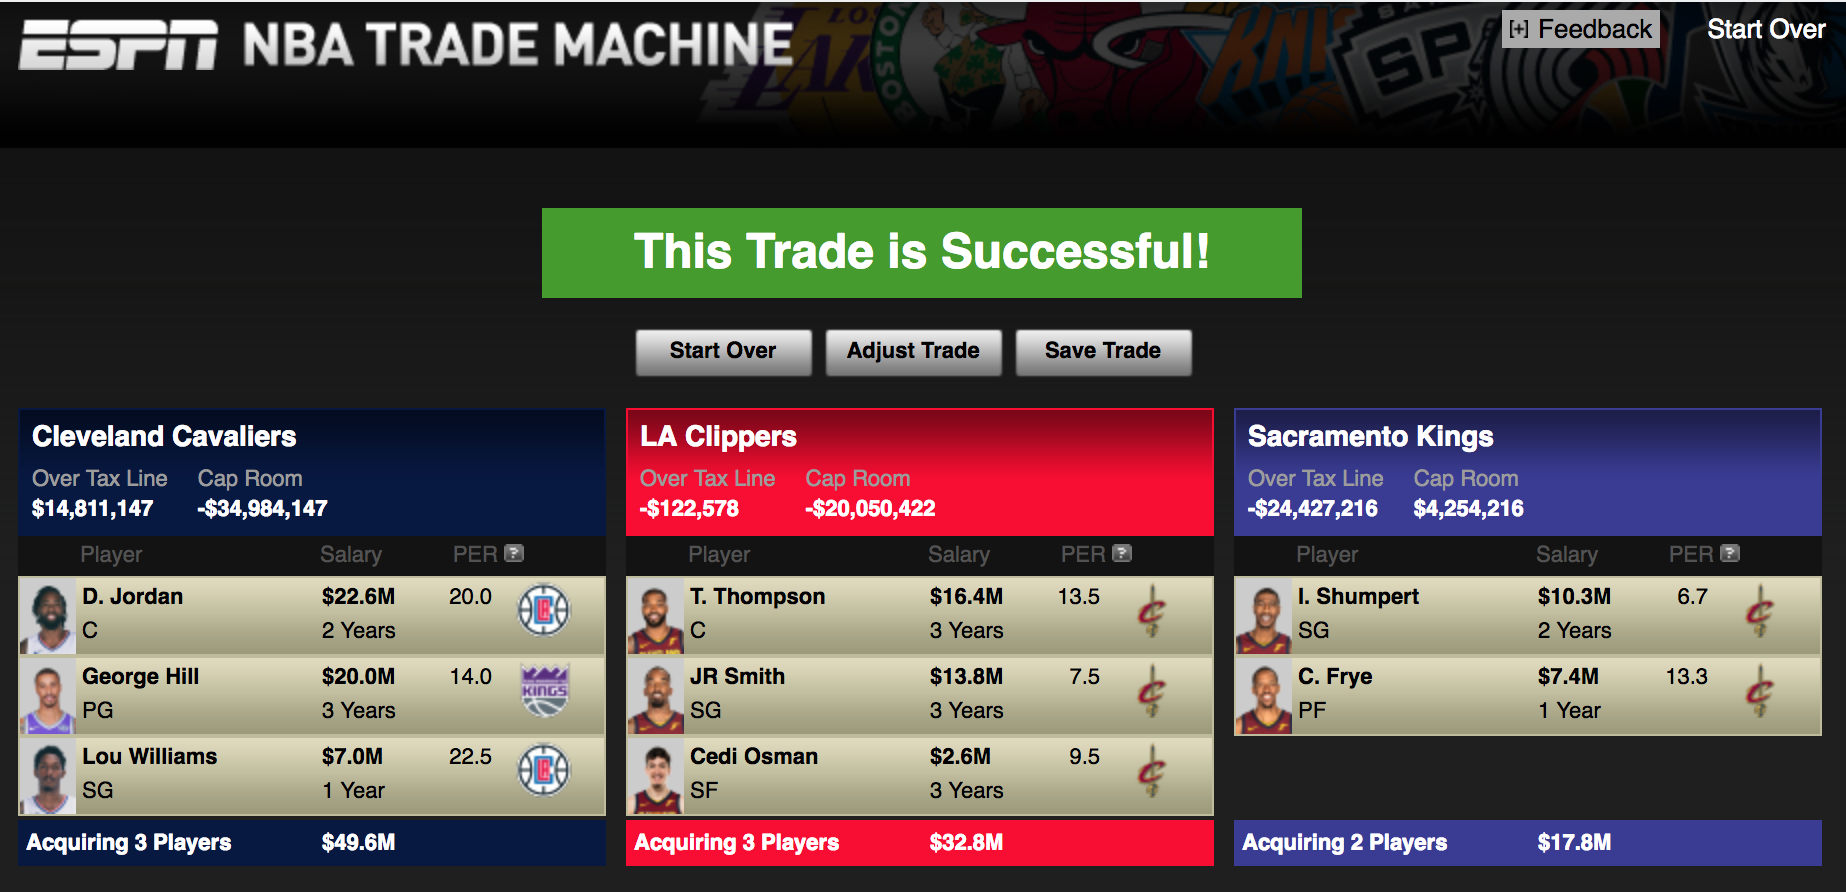 (via ESPN NBA Trade Machine)